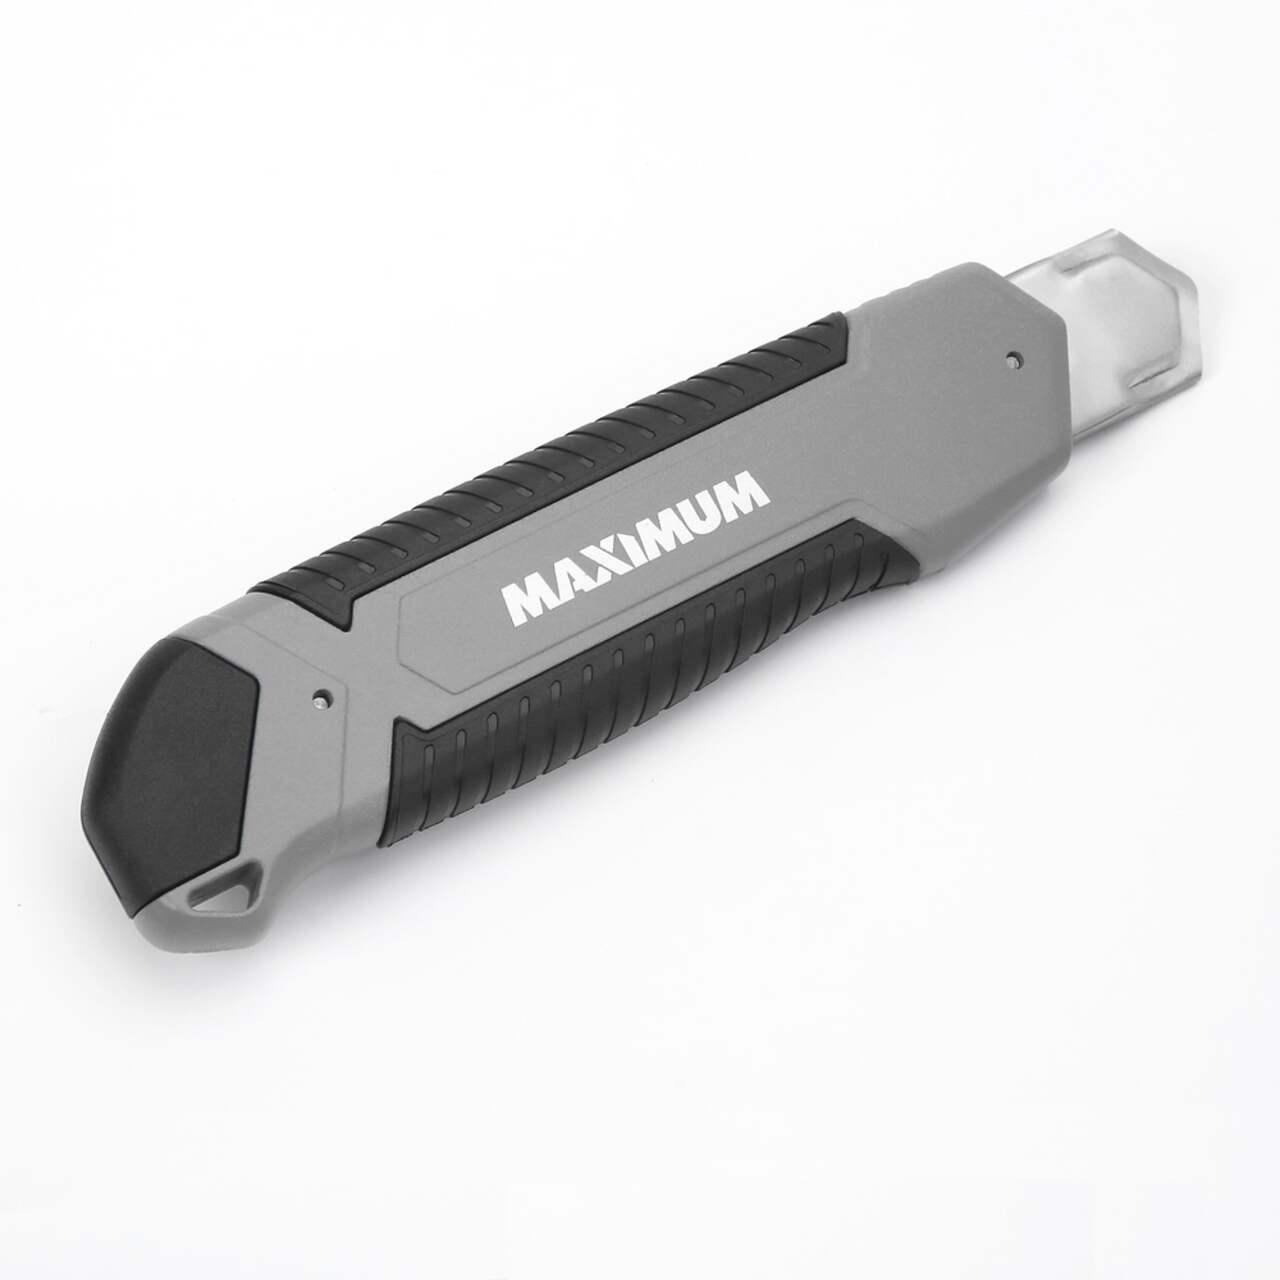 MAXIMUM Snap-Off Utility Knife, 25-mm, Silver/Black